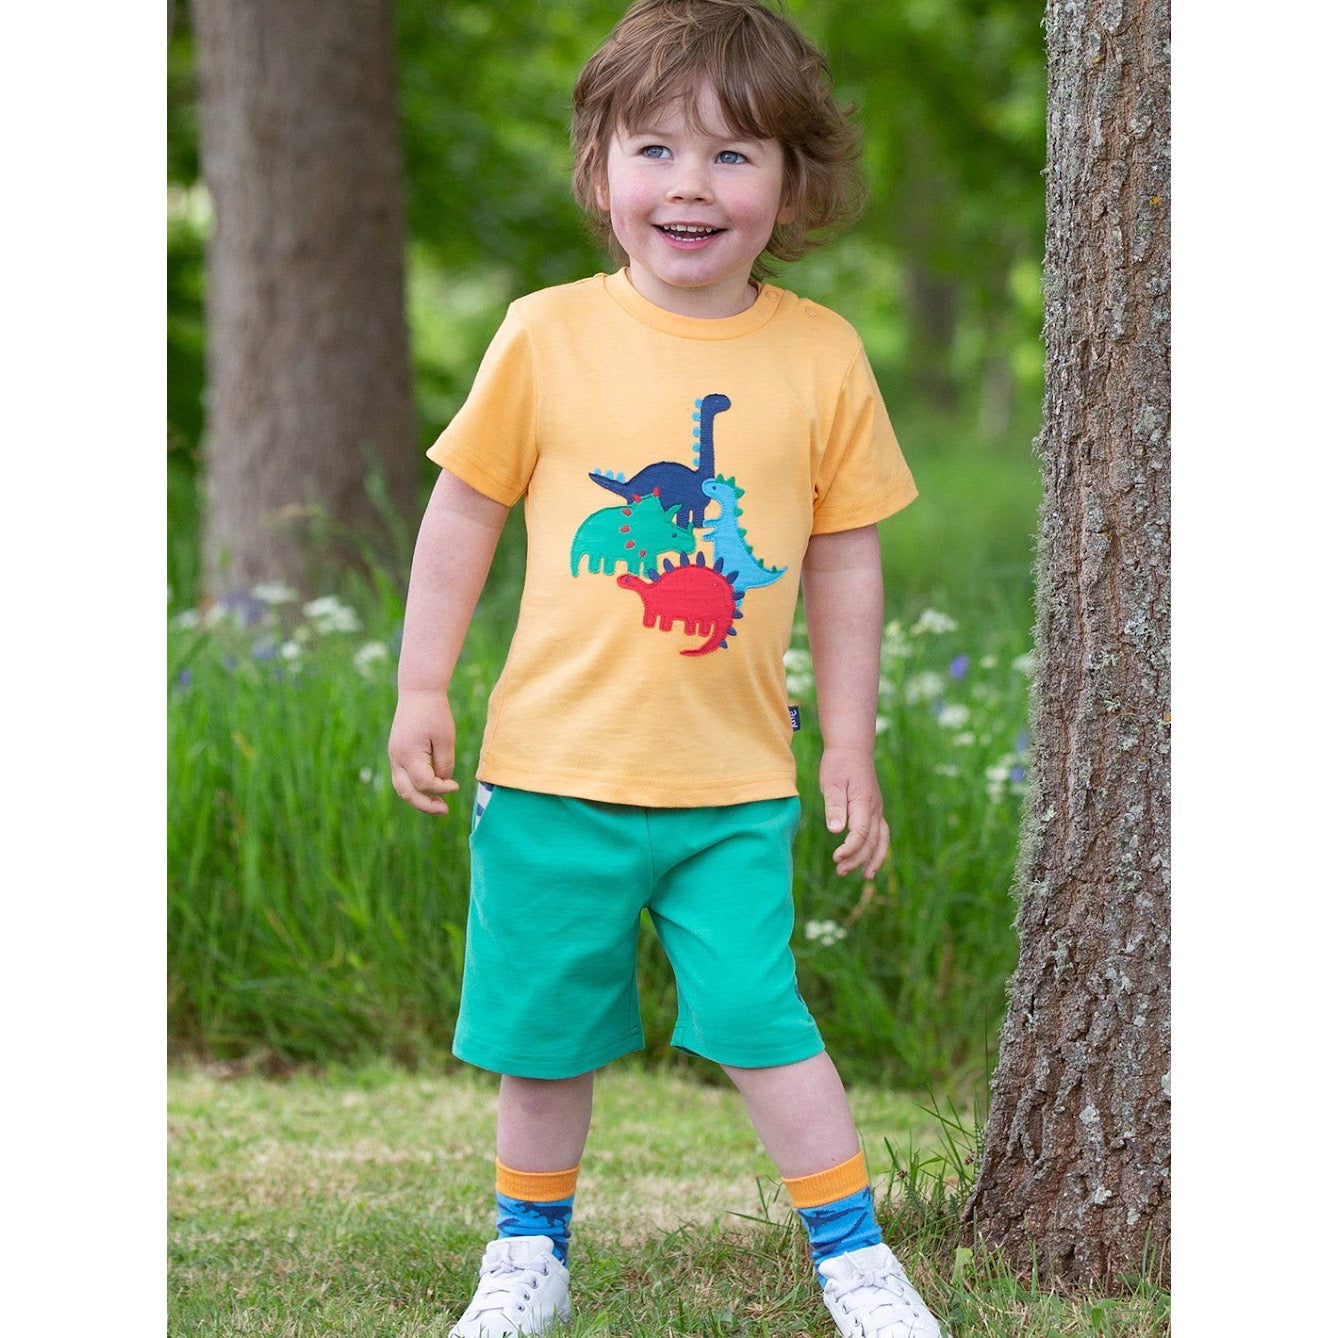 Kite Dino Play Infant T-Shirt 9591 Clothing 3-6M / Yellow,6-9M / Yellow,9-12M / Yellow,12-18M / Yellow,18-24M/2Y / Yellow,3YRS / Yellow,4YRS / Yellow,5YRS / Yellow